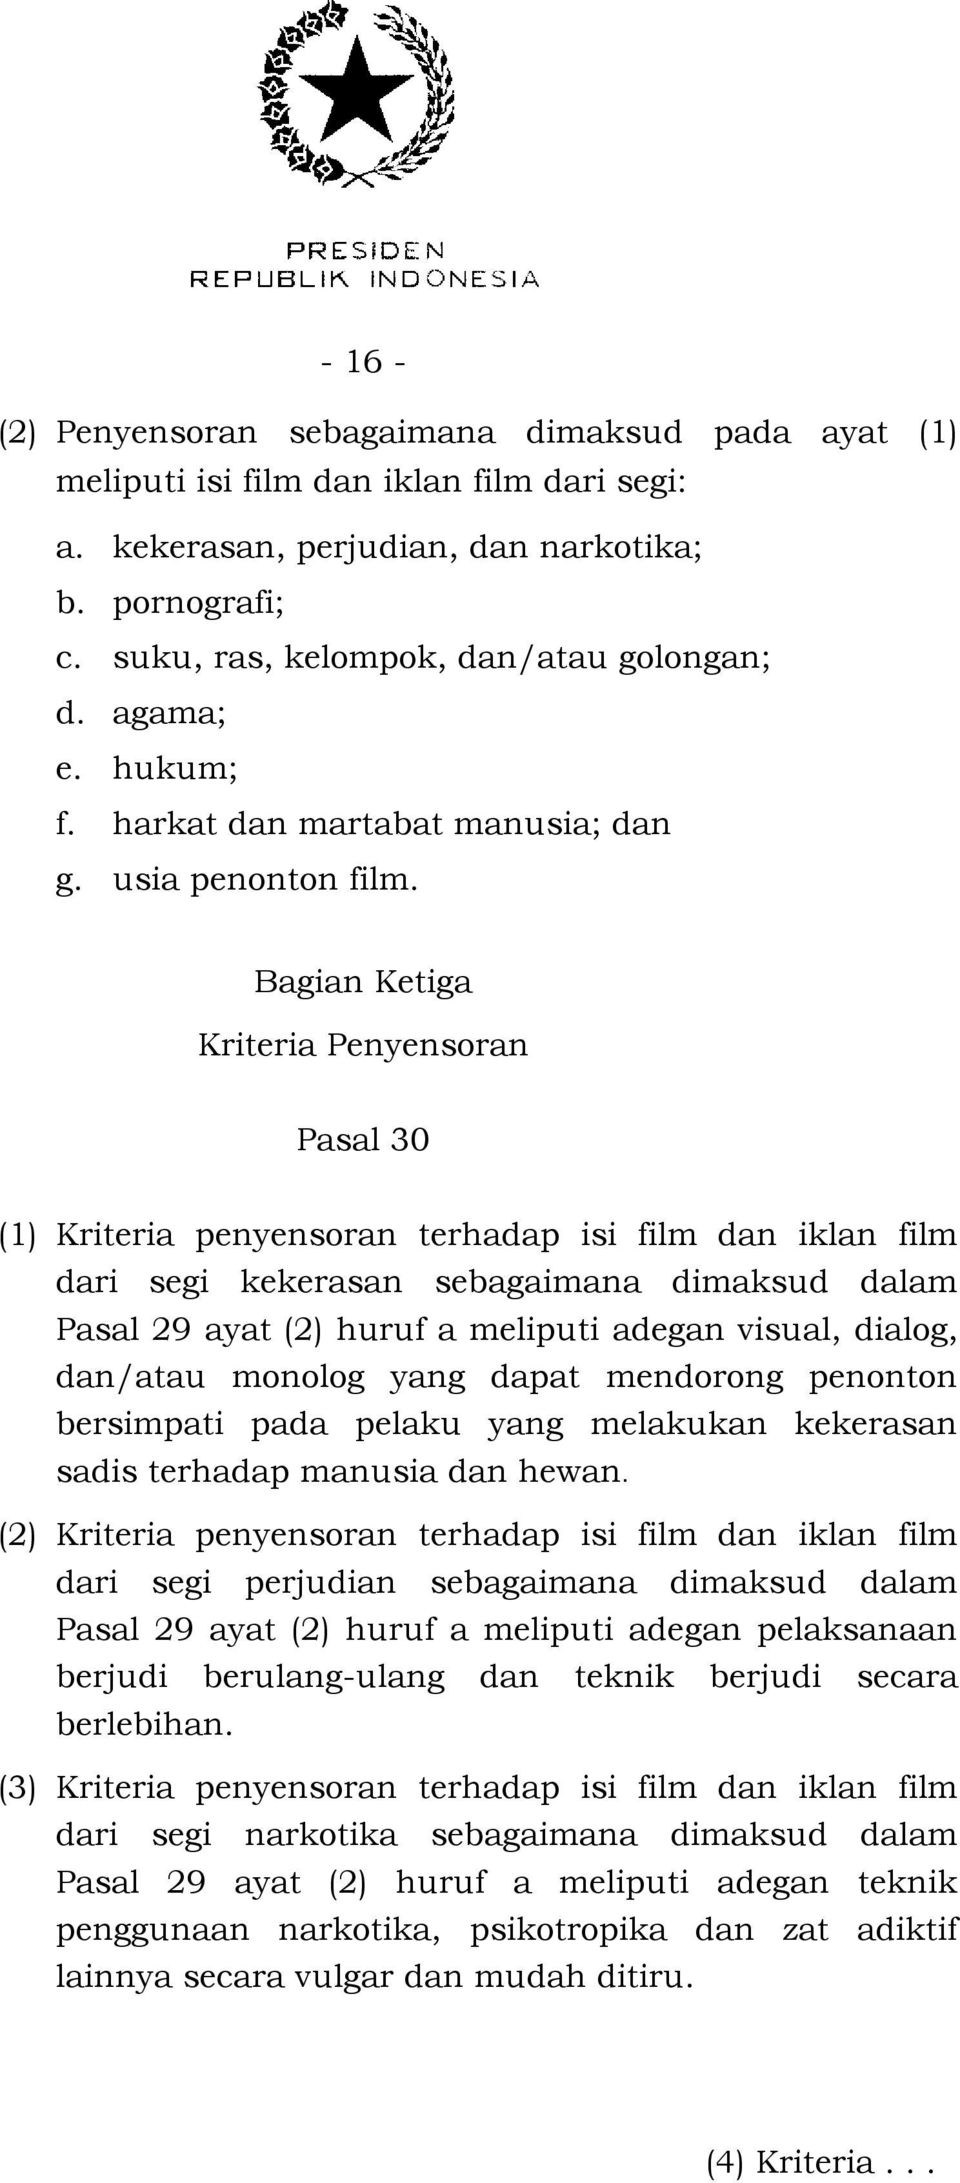 Bagian Ketiga Kriteria Penyensoran Pasal 30 (1) Kriteria penyensoran terhadap isi film dan iklan film dari segi kekerasan sebagaimana dimaksud dalam Pasal 29 ayat (2) huruf a meliputi adegan visual,